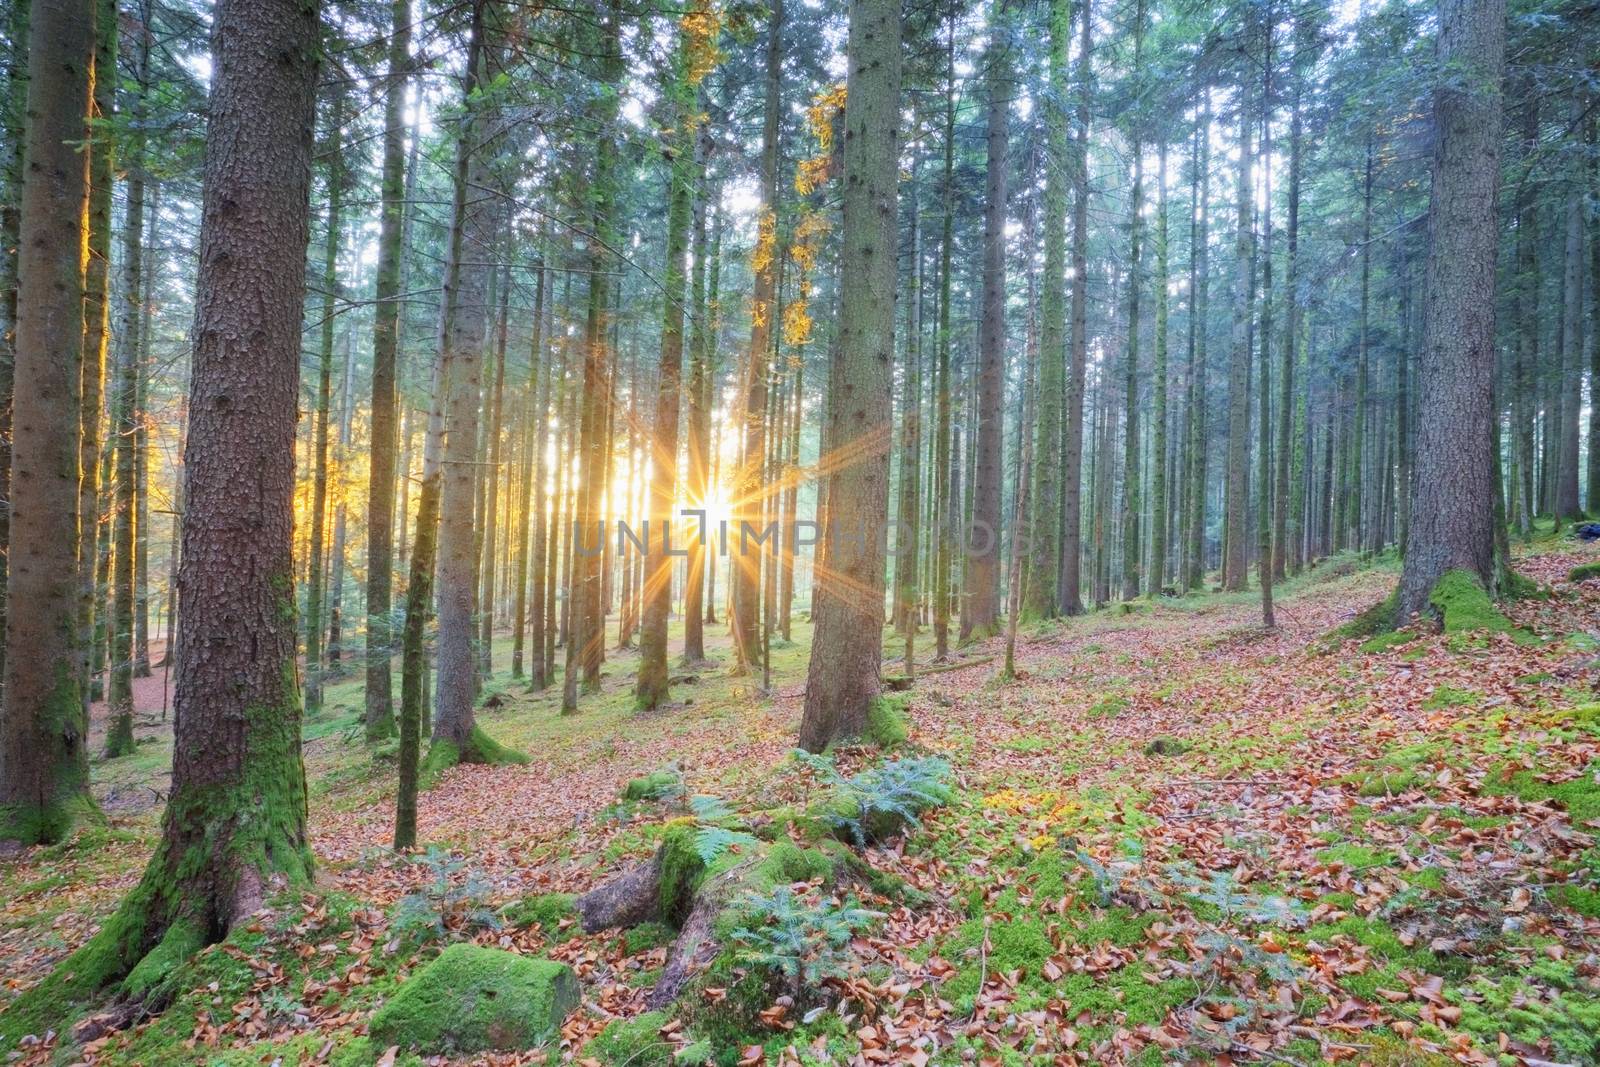 Sunset in a forest
Switzerland